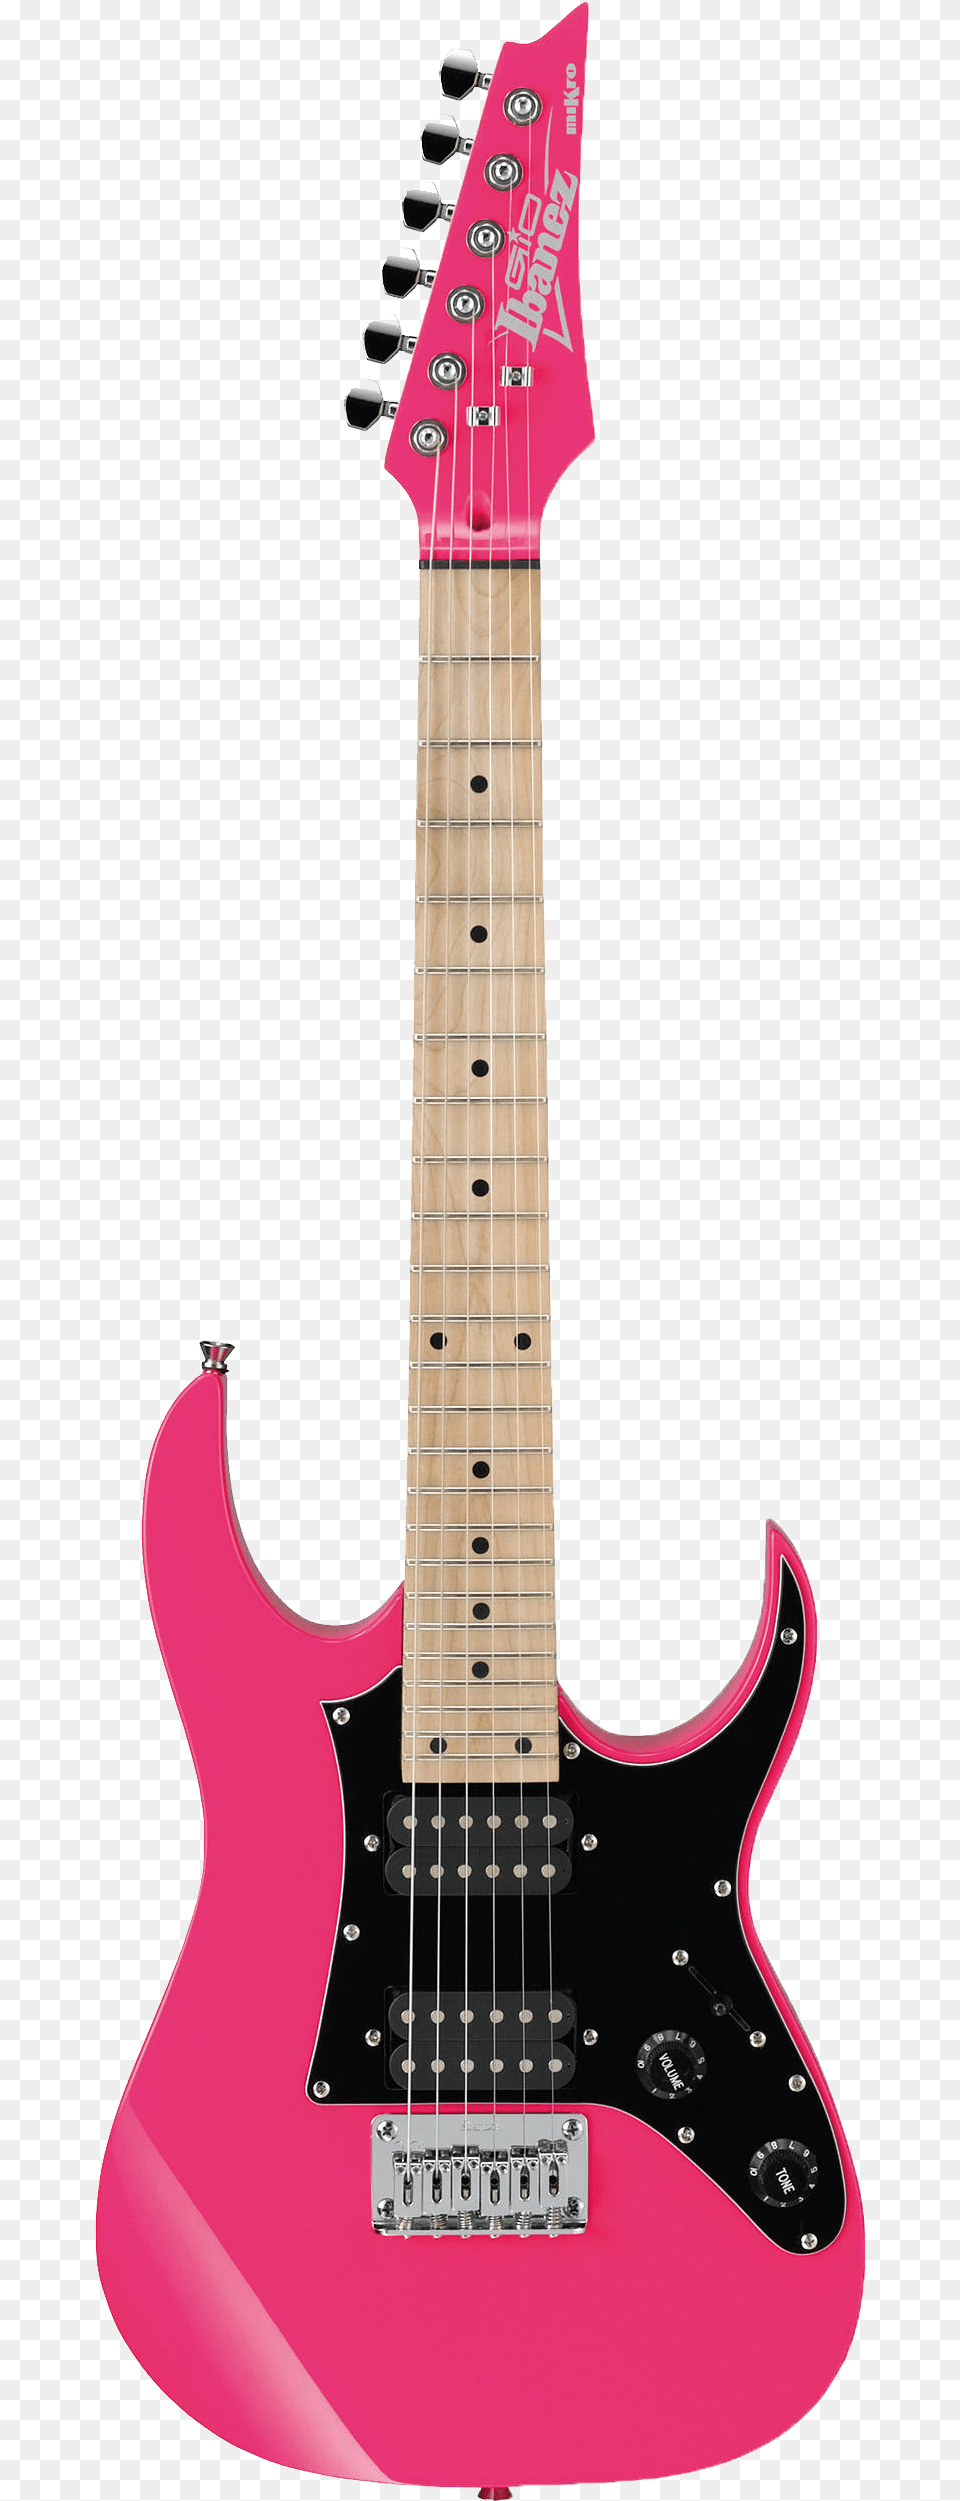 New Ibanez Guitar 2018, Electric Guitar, Musical Instrument, Bass Guitar Png Image